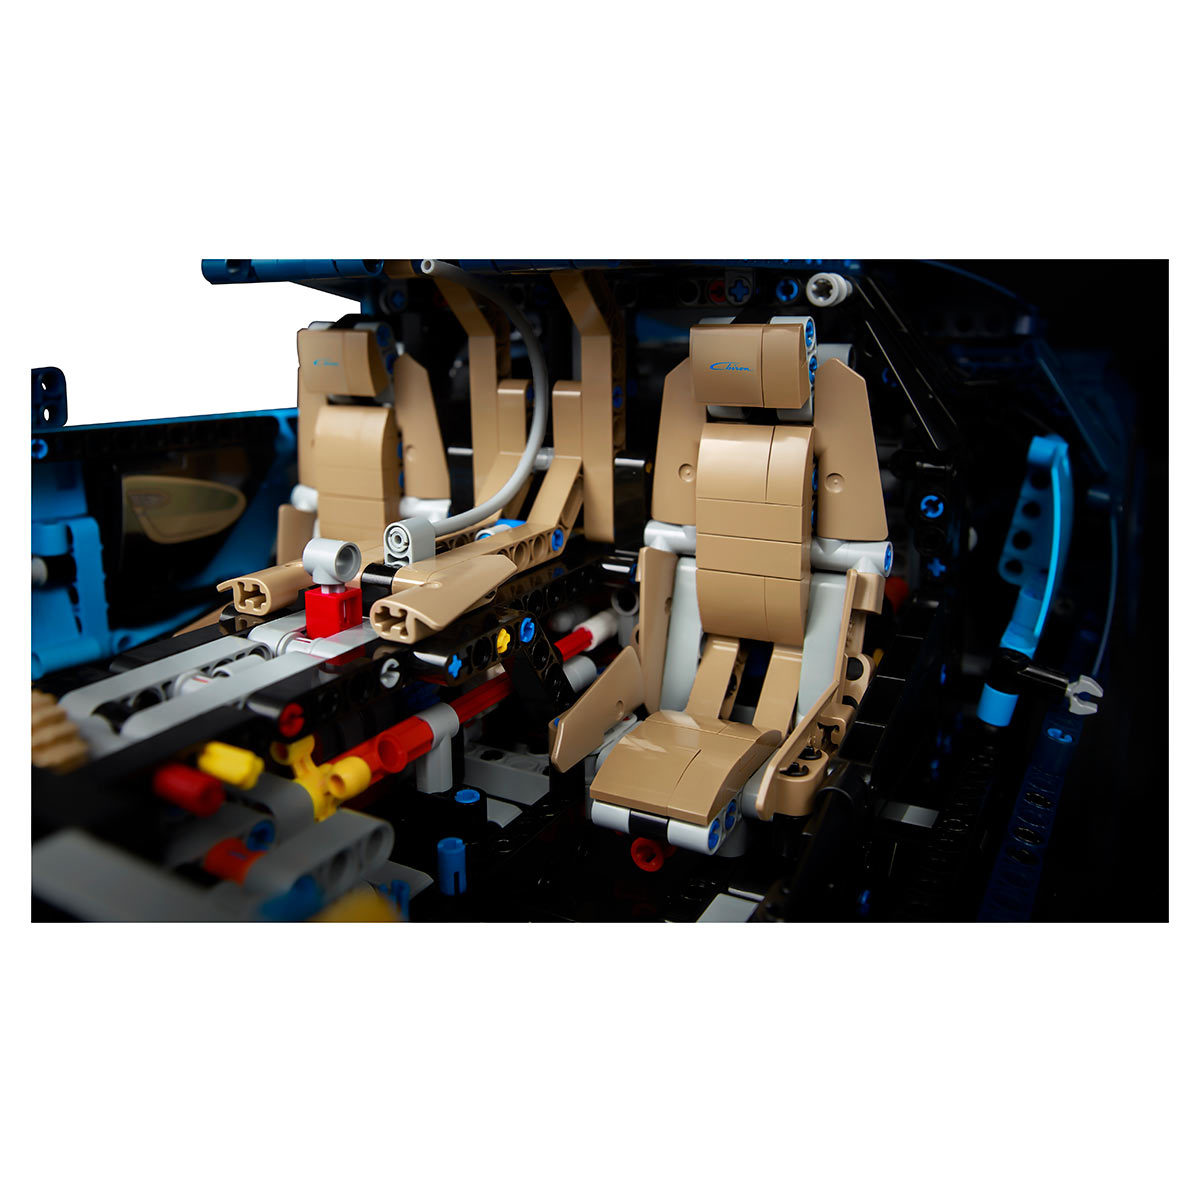 LEGO Technic Bugatti Chiron - Model 42083 (16+ Years) 